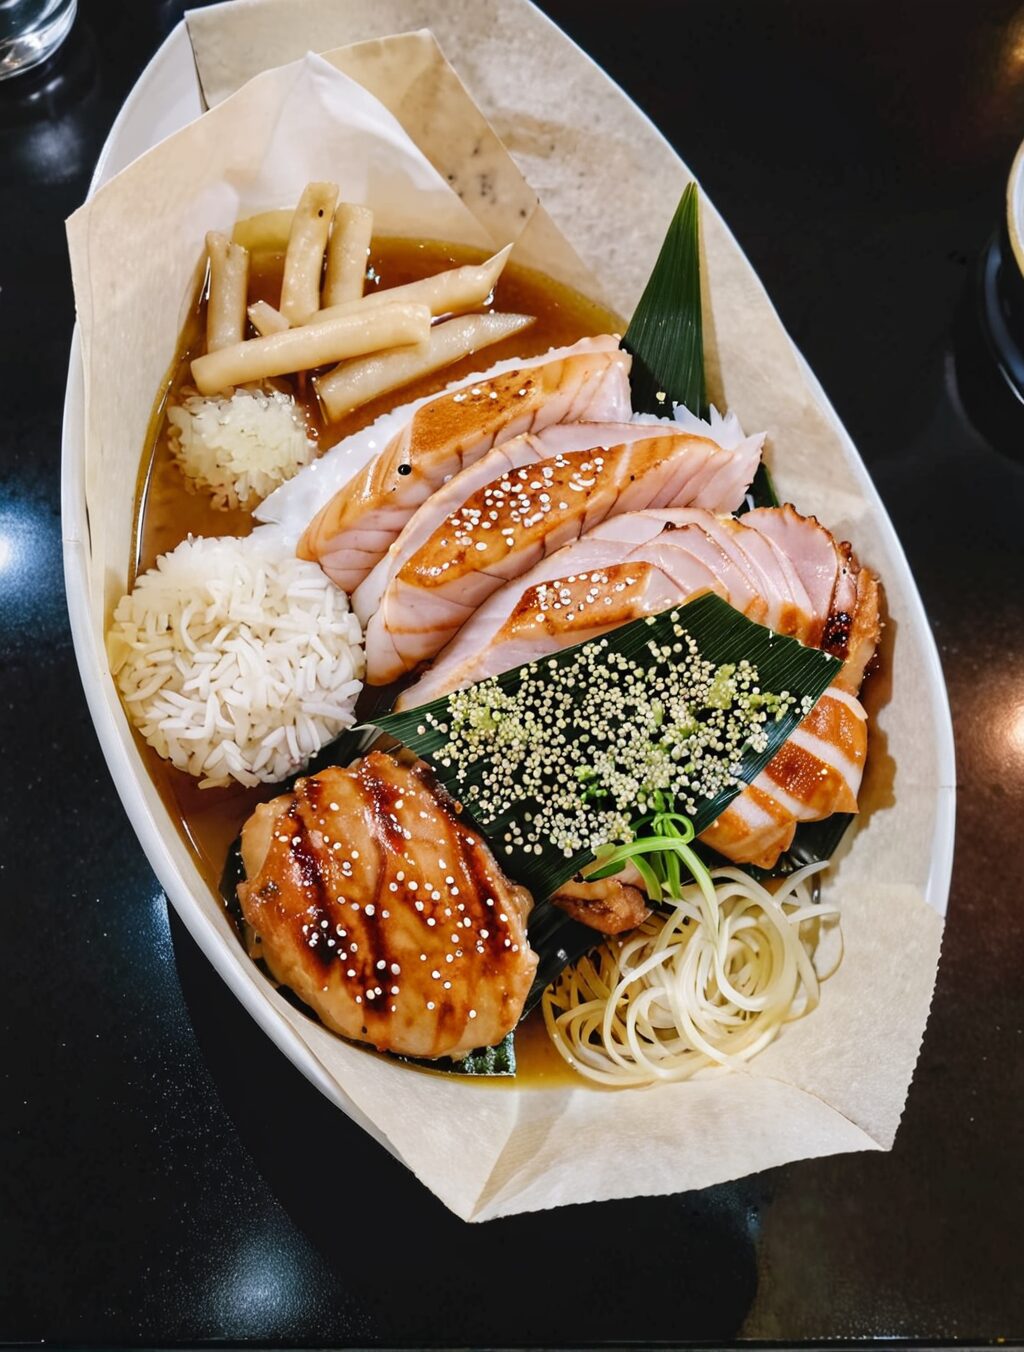 where to eat in osaka japan